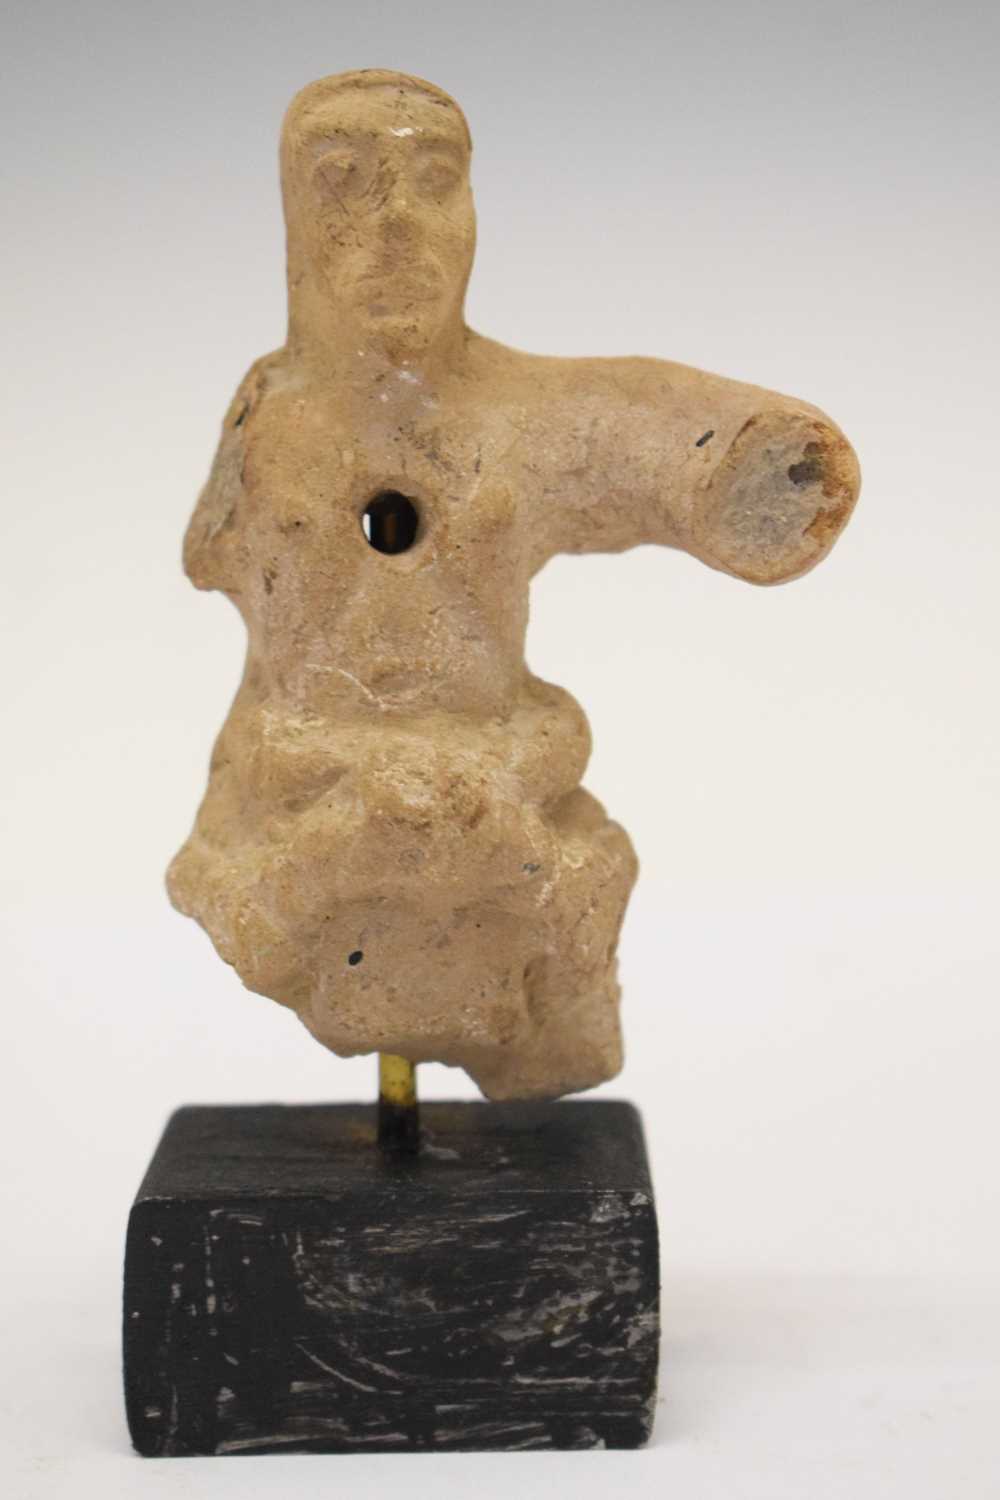 Lot 151 - Antiquities - Believed Pre Columbian (possibly Aztec) terracotta figure fragment